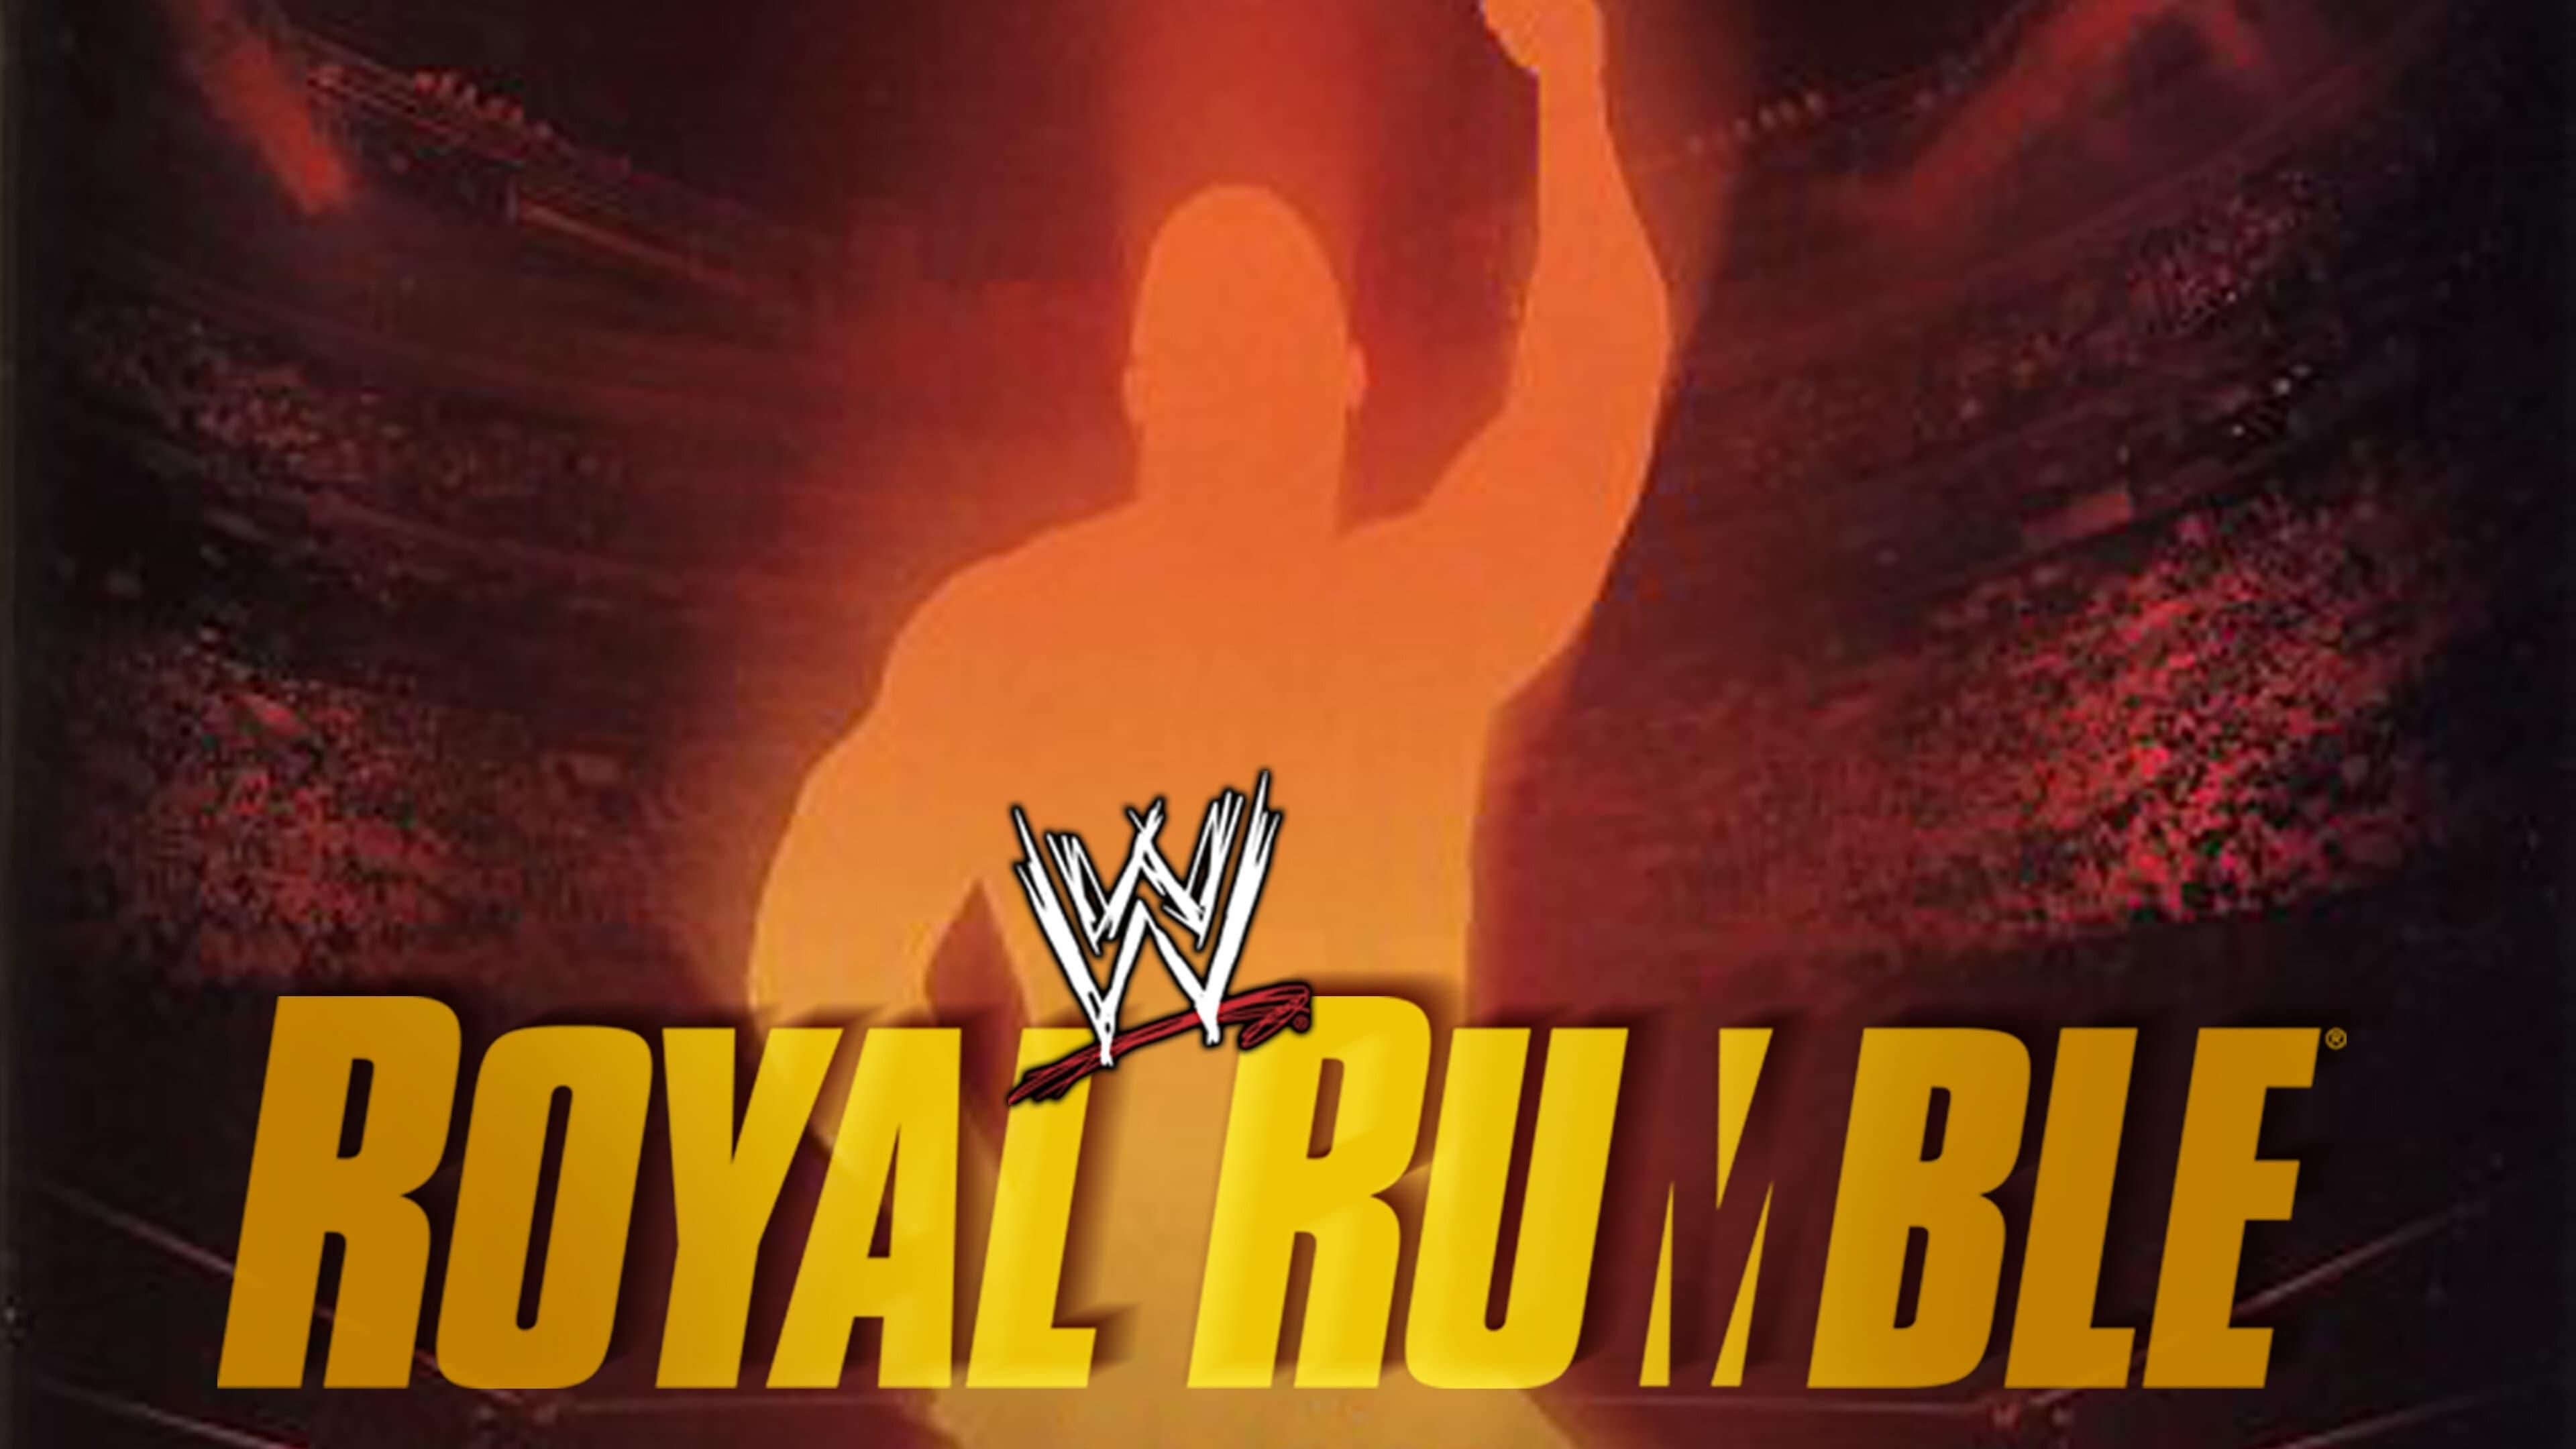 WWE Royal Rumble 2002 backdrop